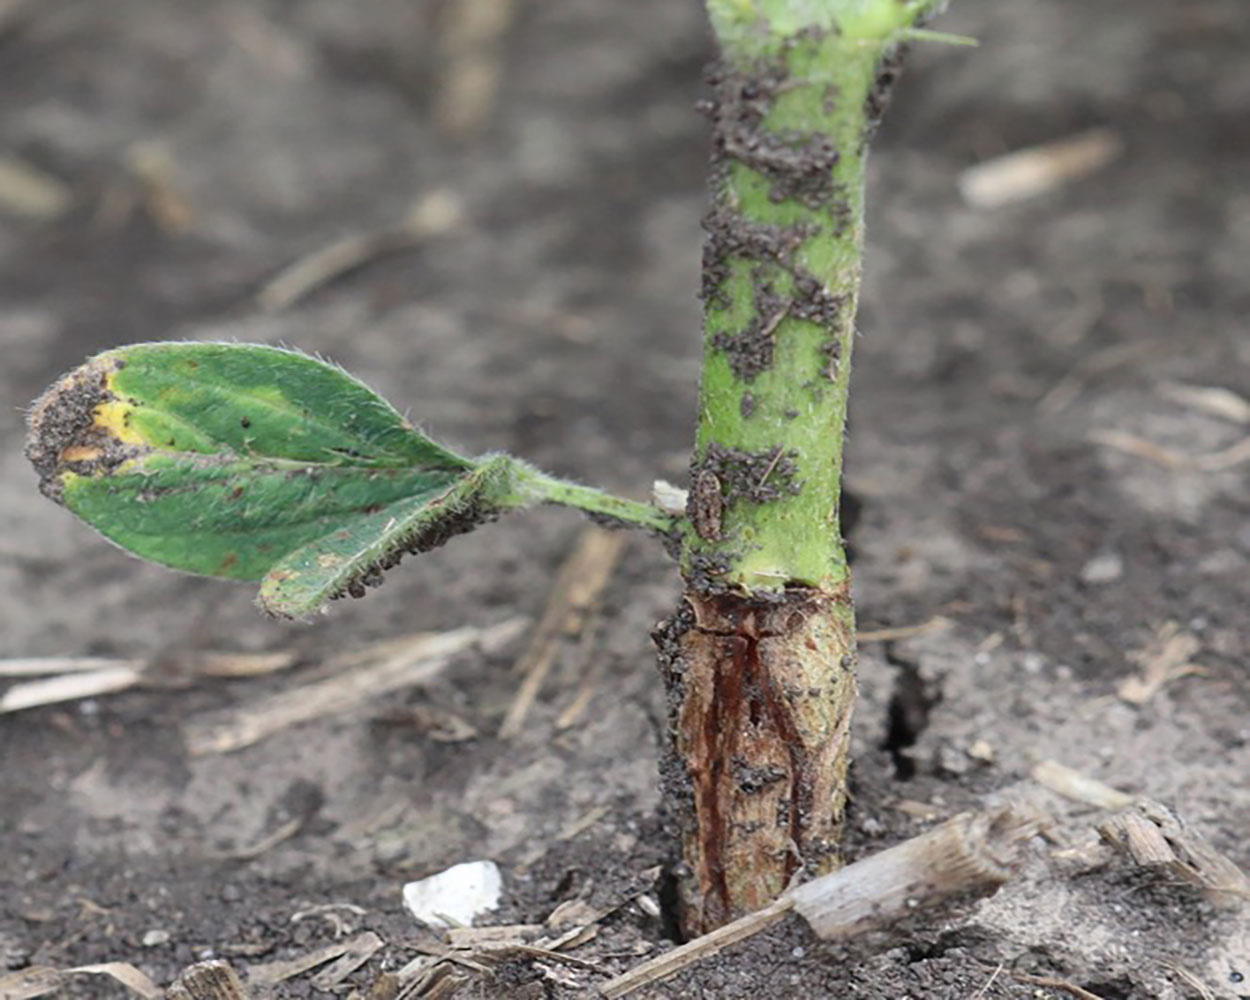 Base of soybean stem with orange larvae present under the epidermis.